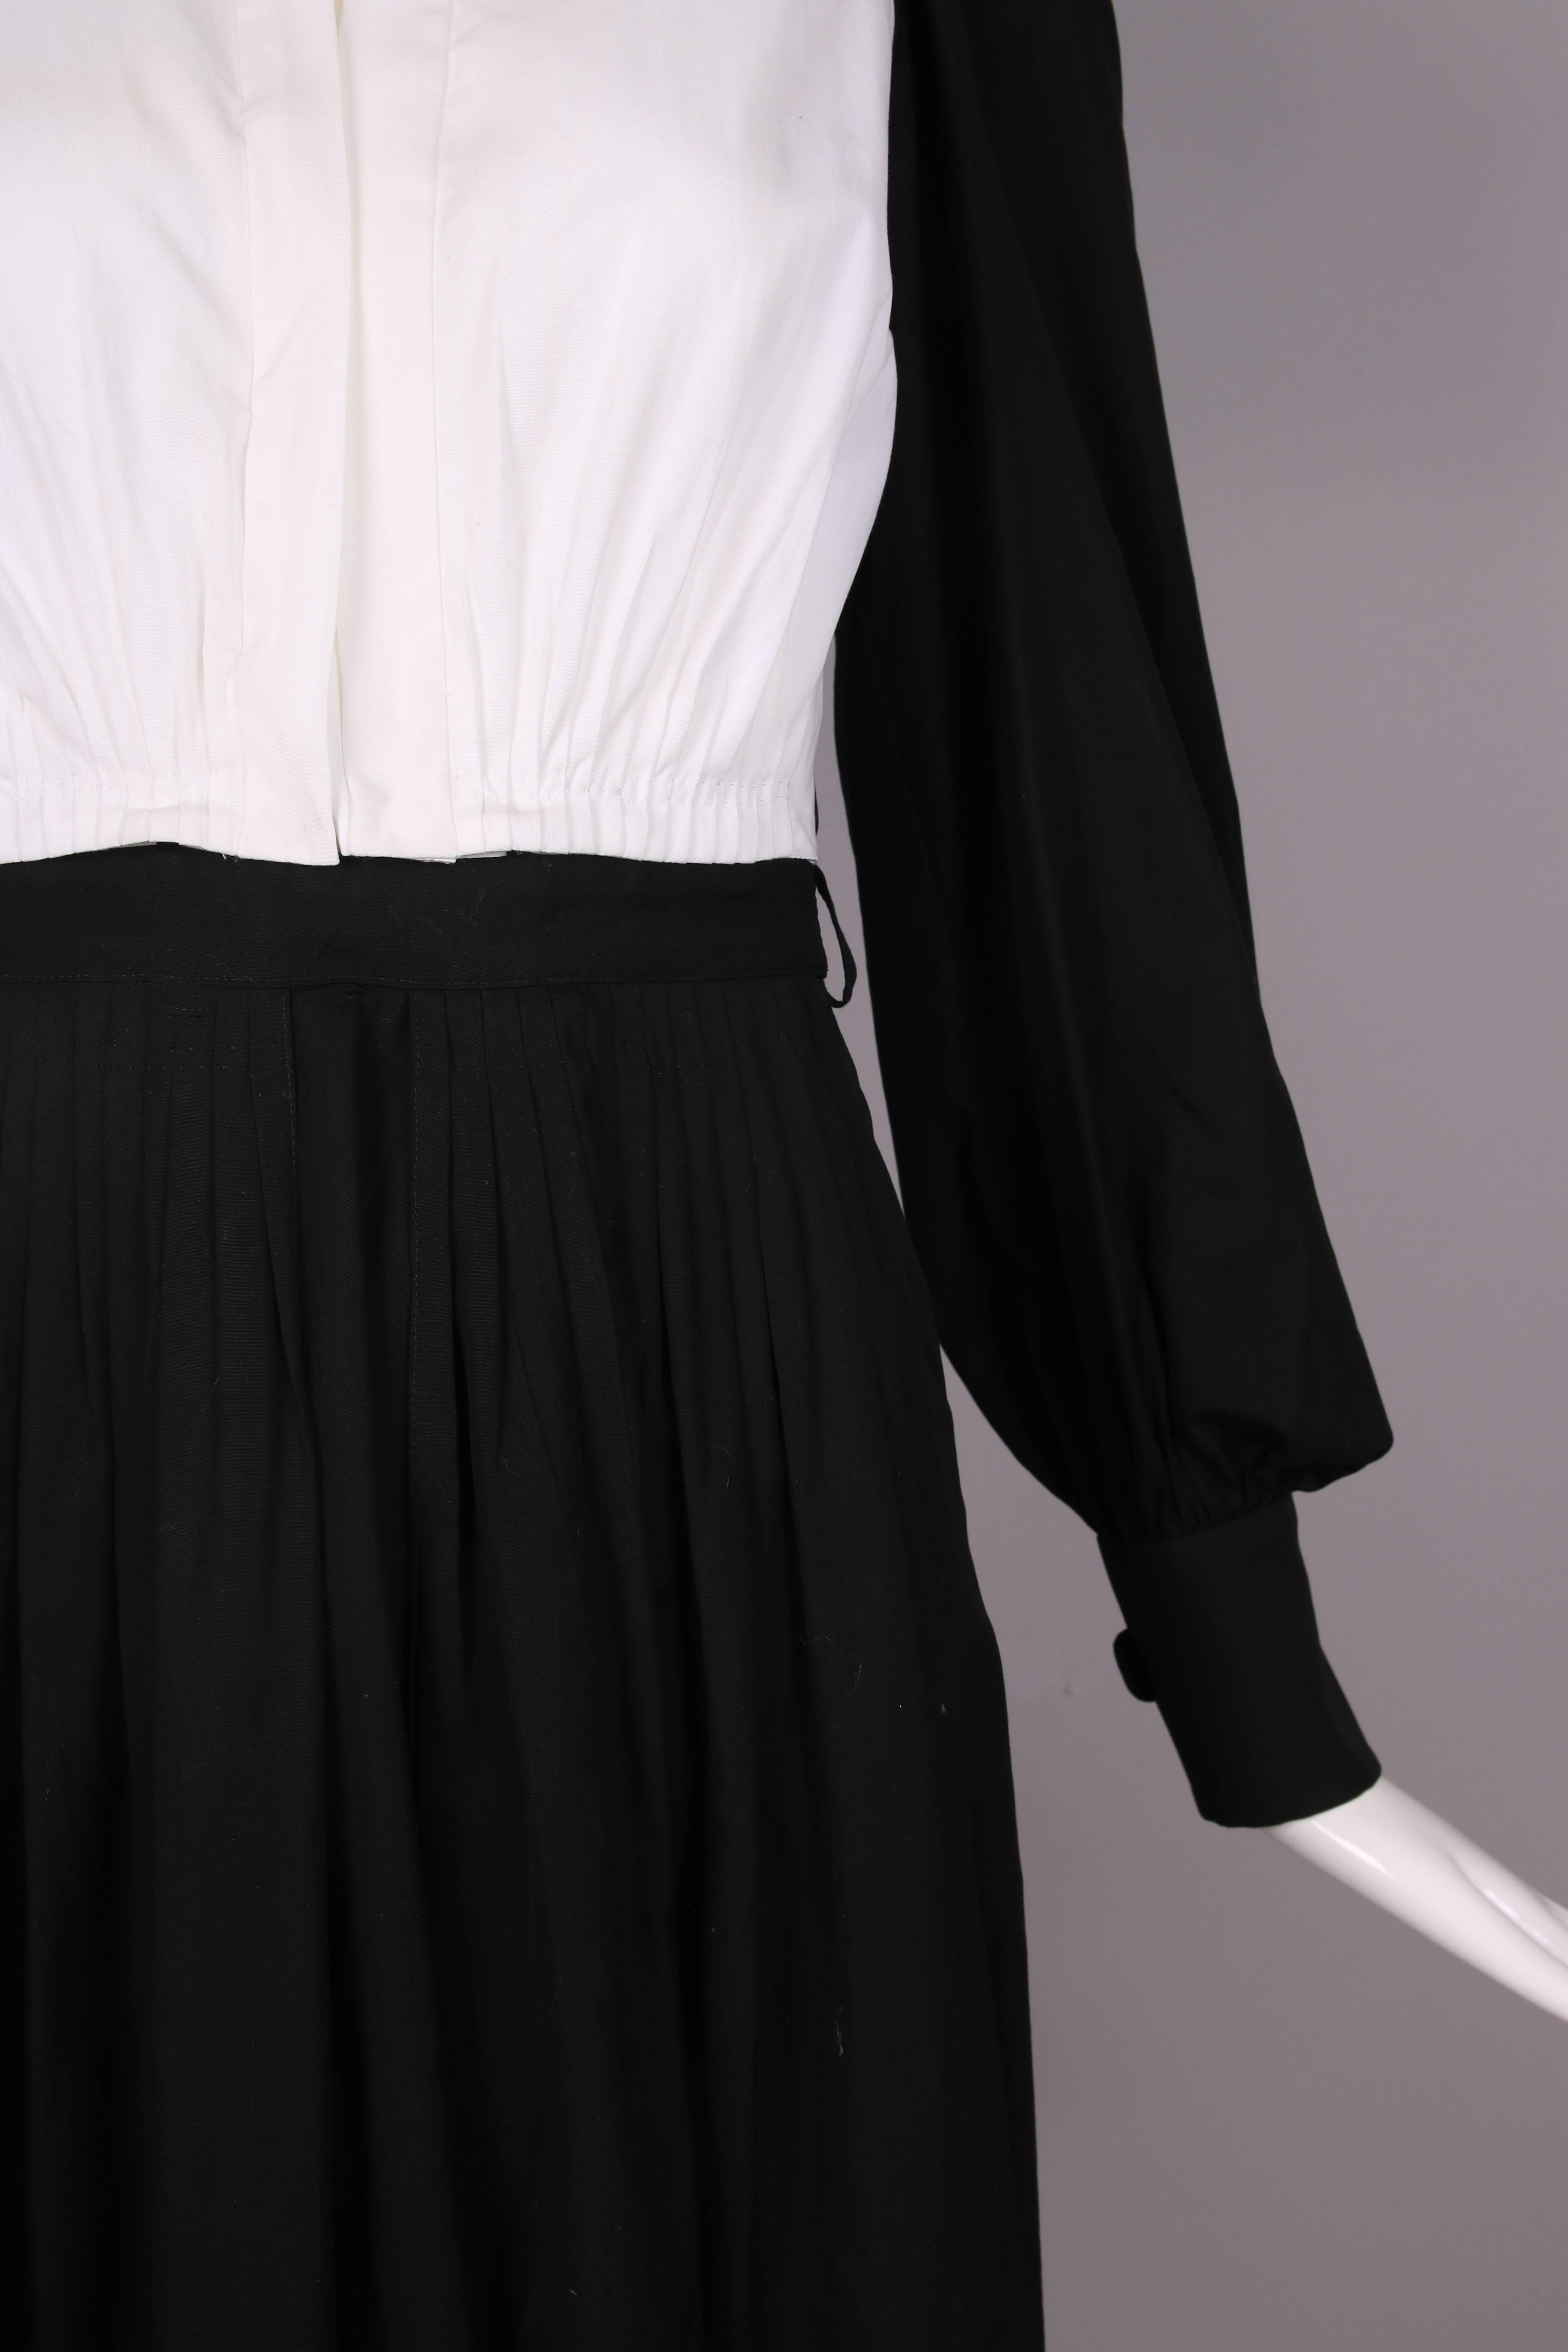 Yves Saint Laurent YSL Black & White Color Block Cotton Day Dress 2